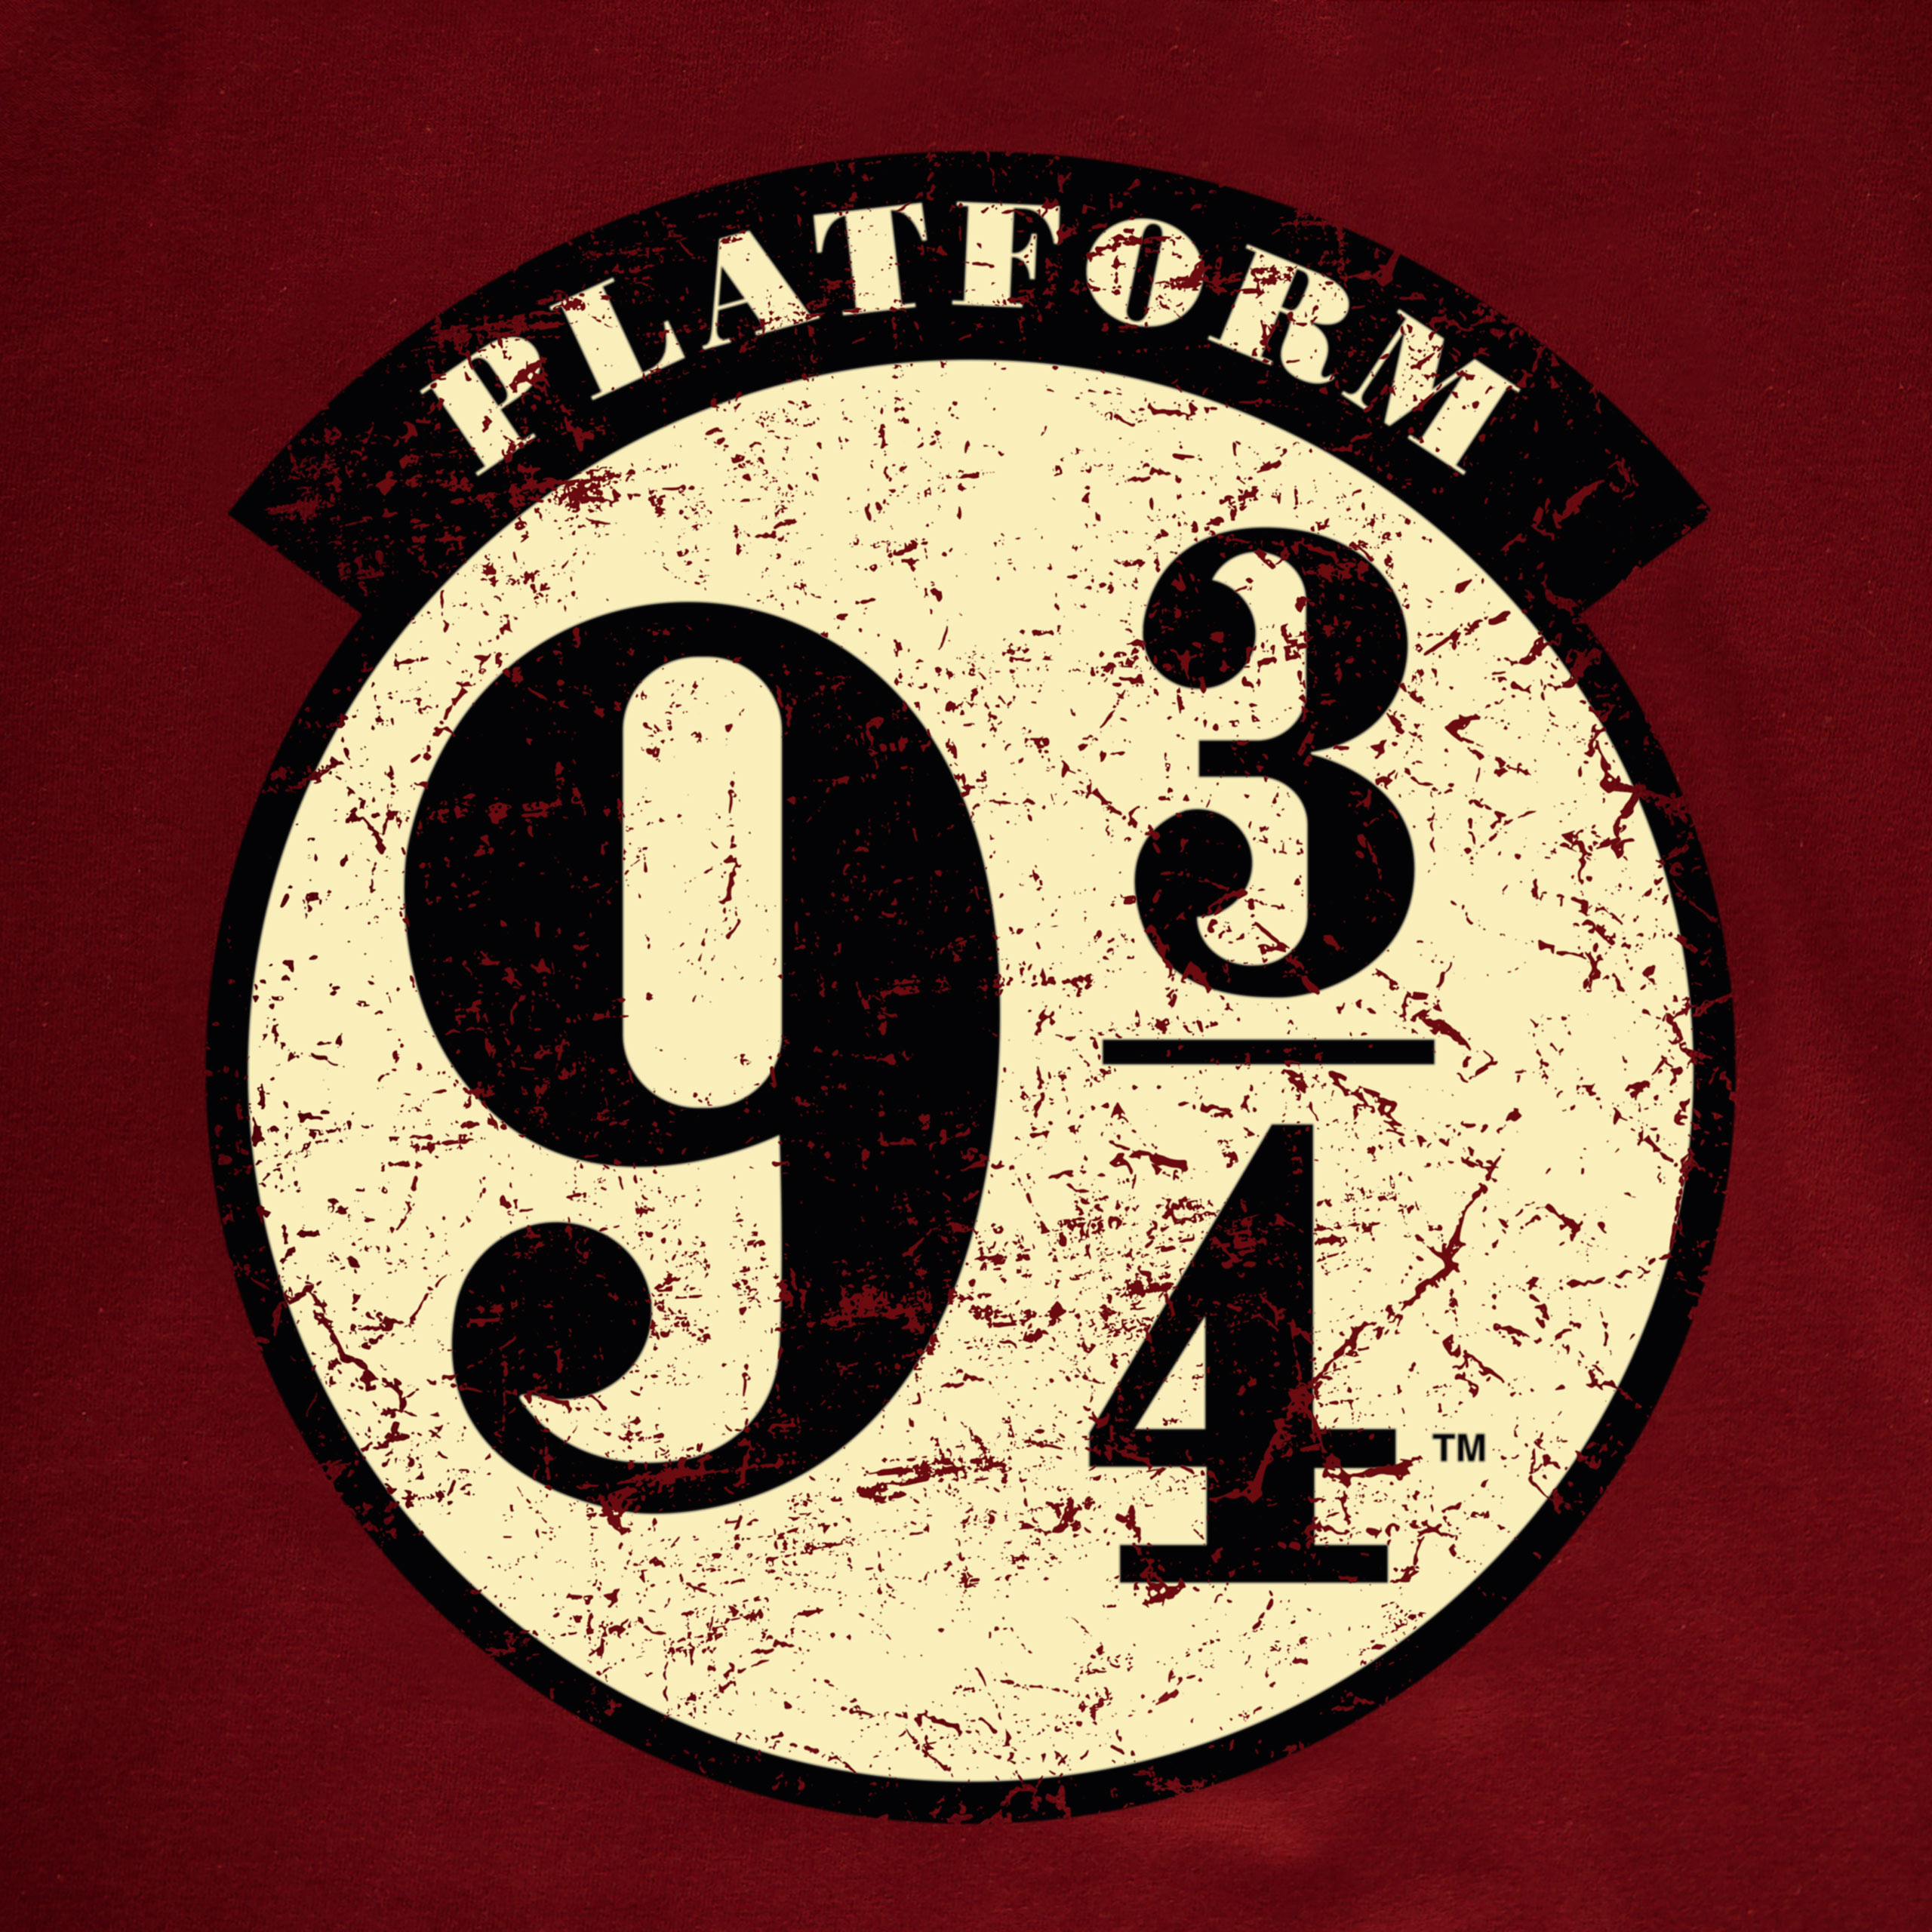 Harry Potter - 9 3/4 T-Shirt